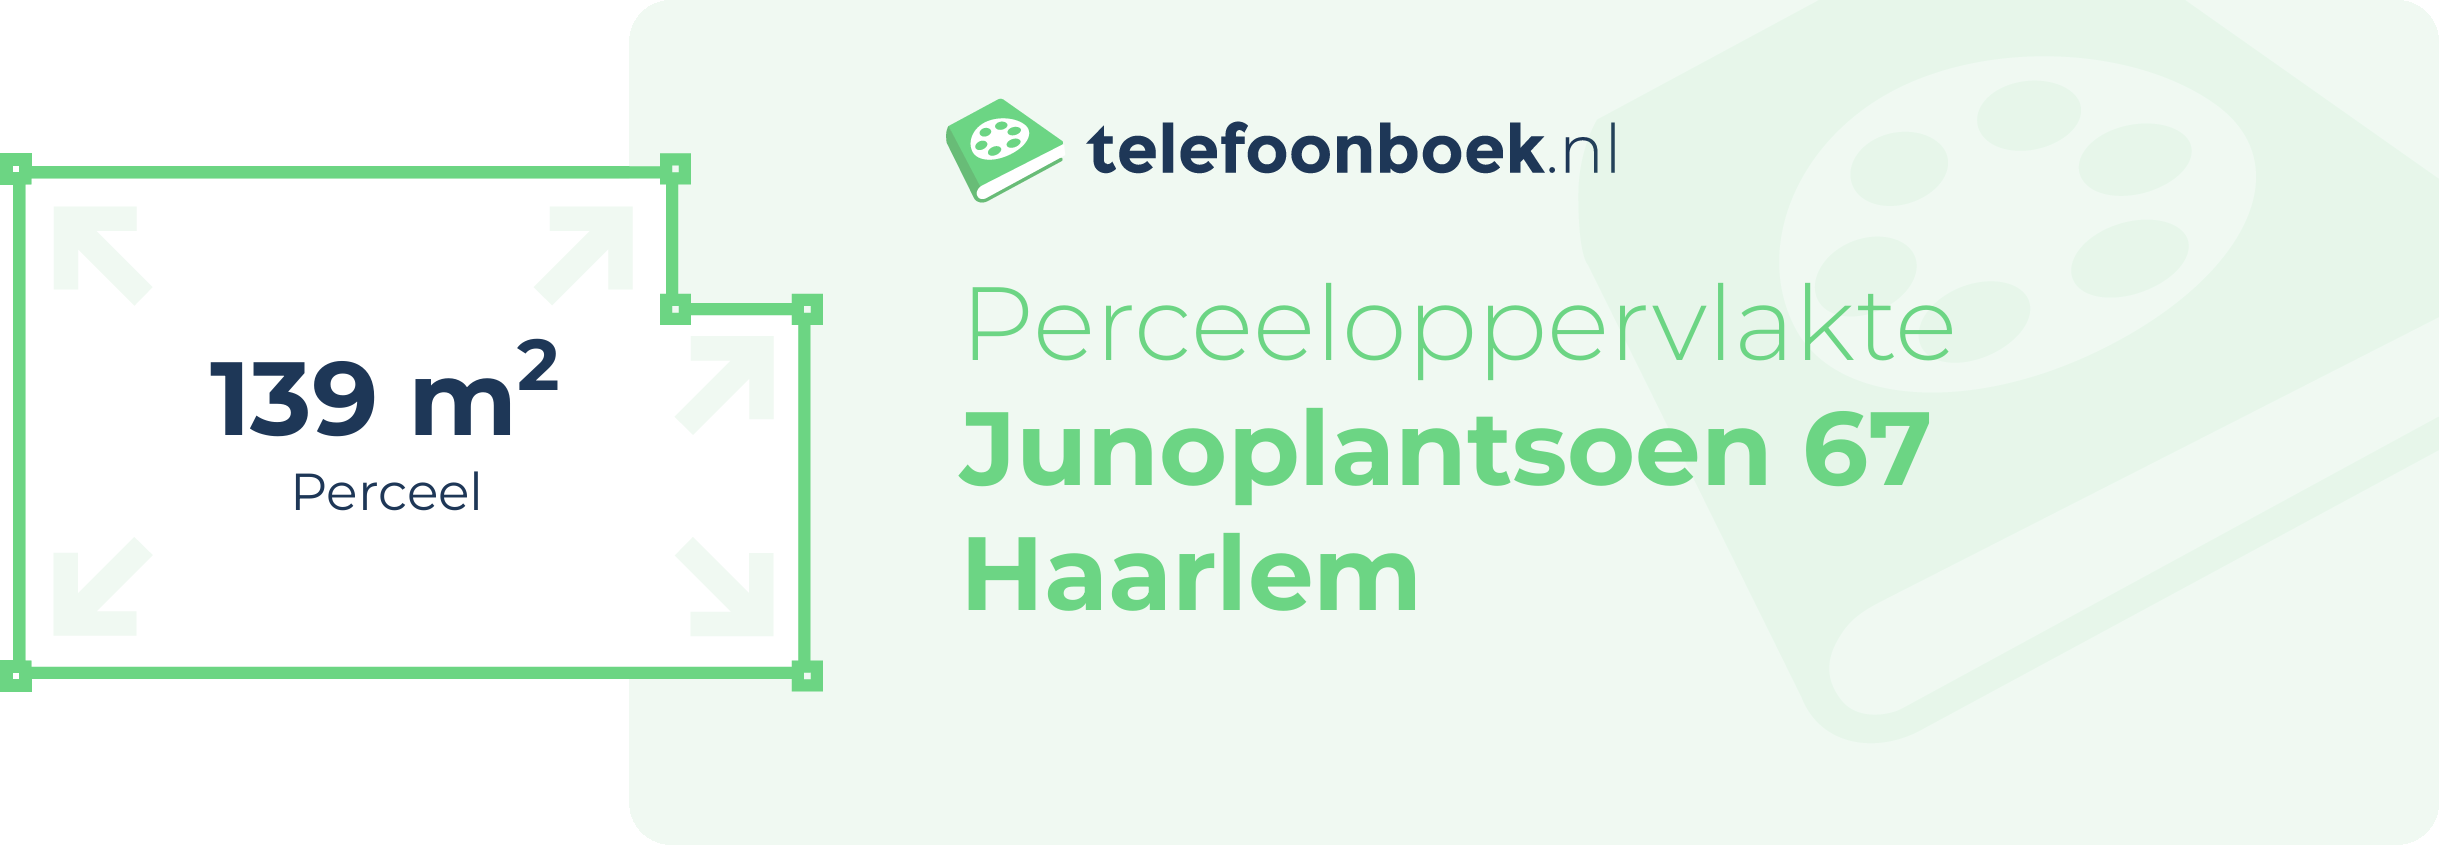 Perceeloppervlakte Junoplantsoen 67 Haarlem